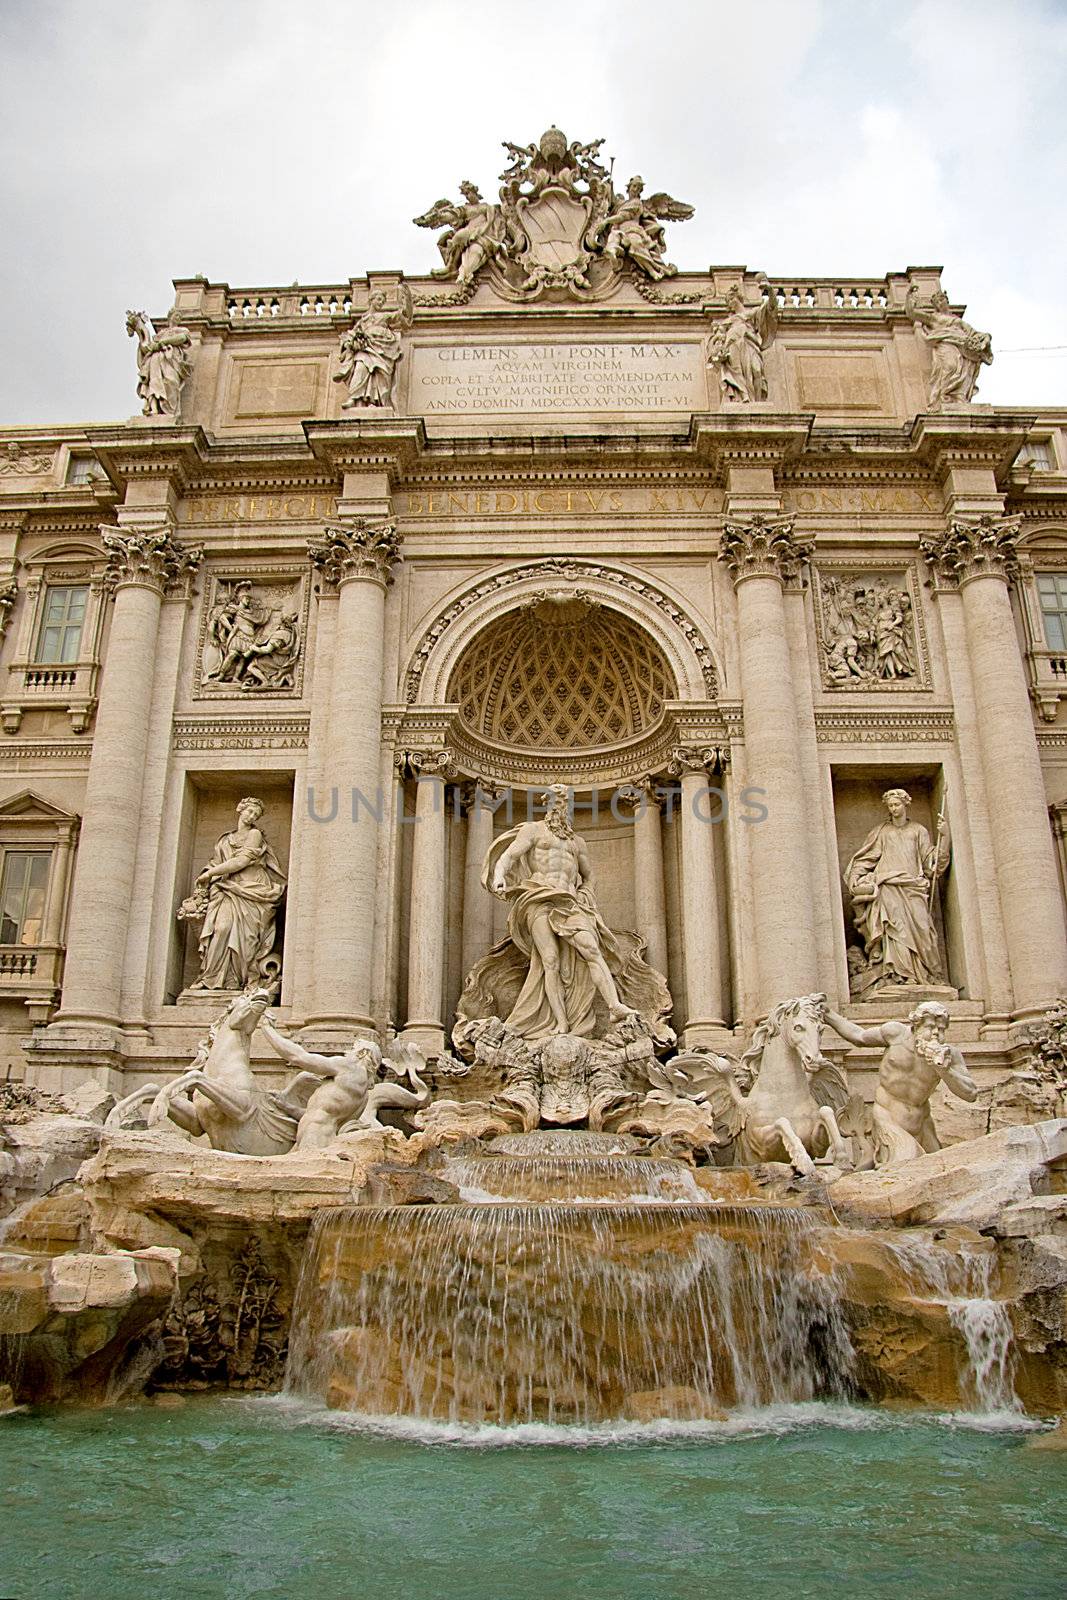 View of Fountain Di Trevi in Rome, Italy